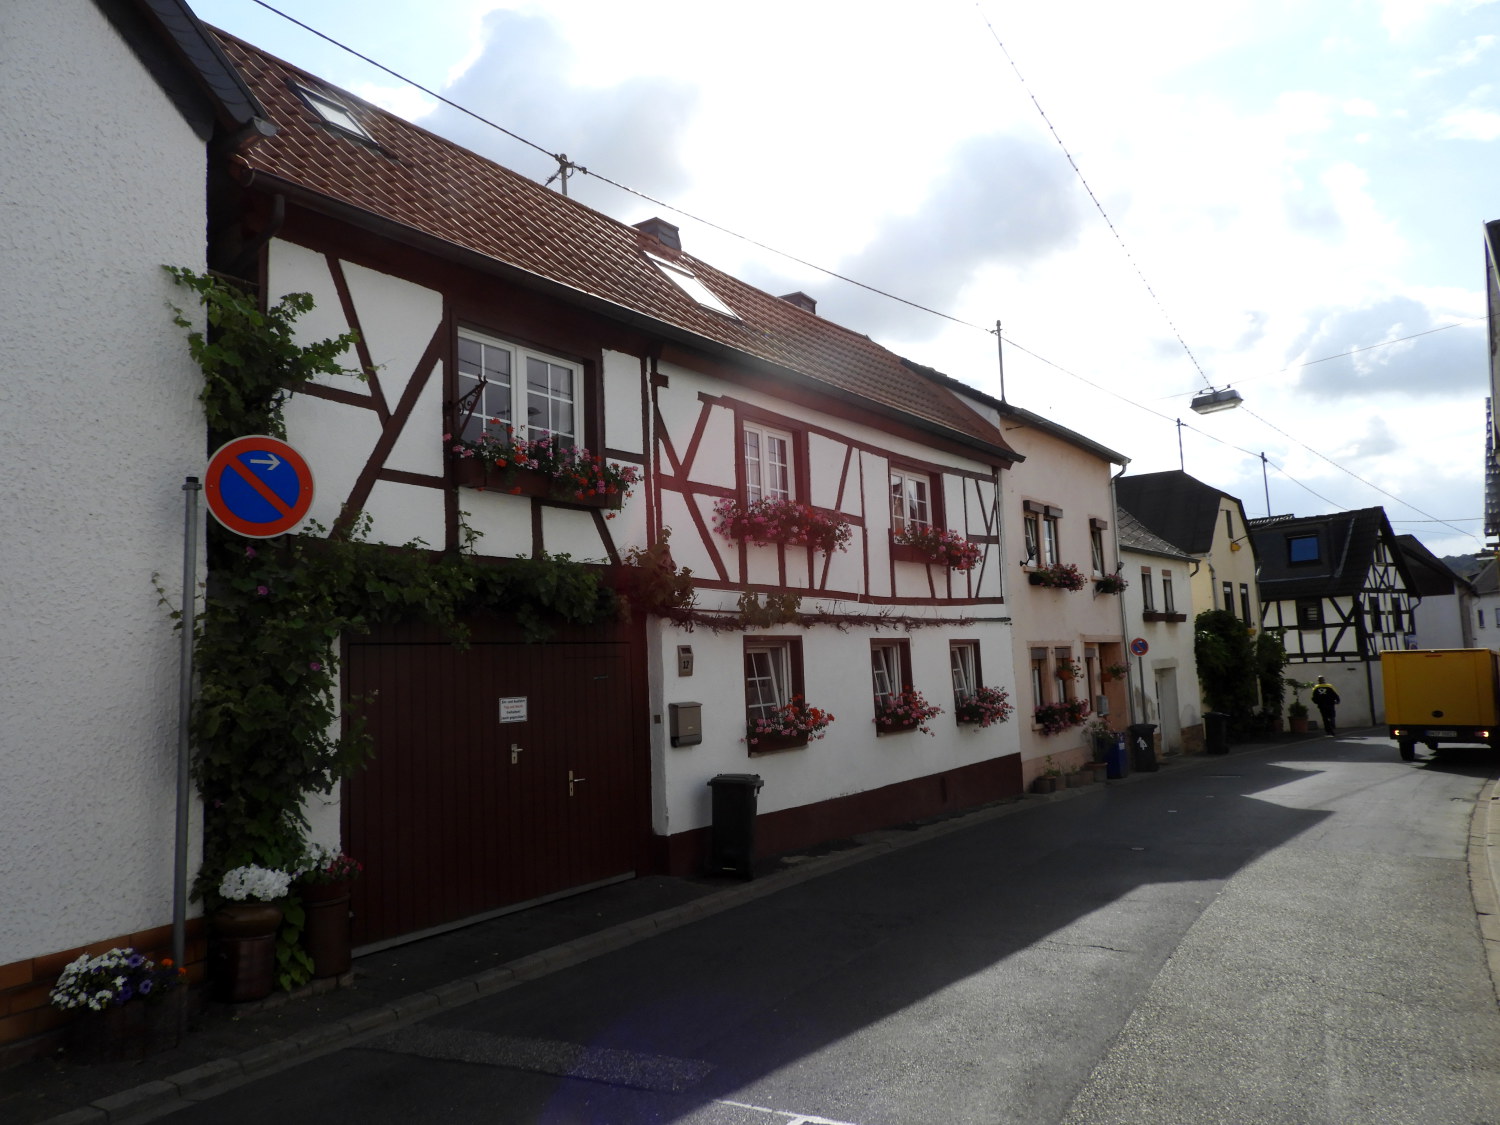 Houses in Miesenheim